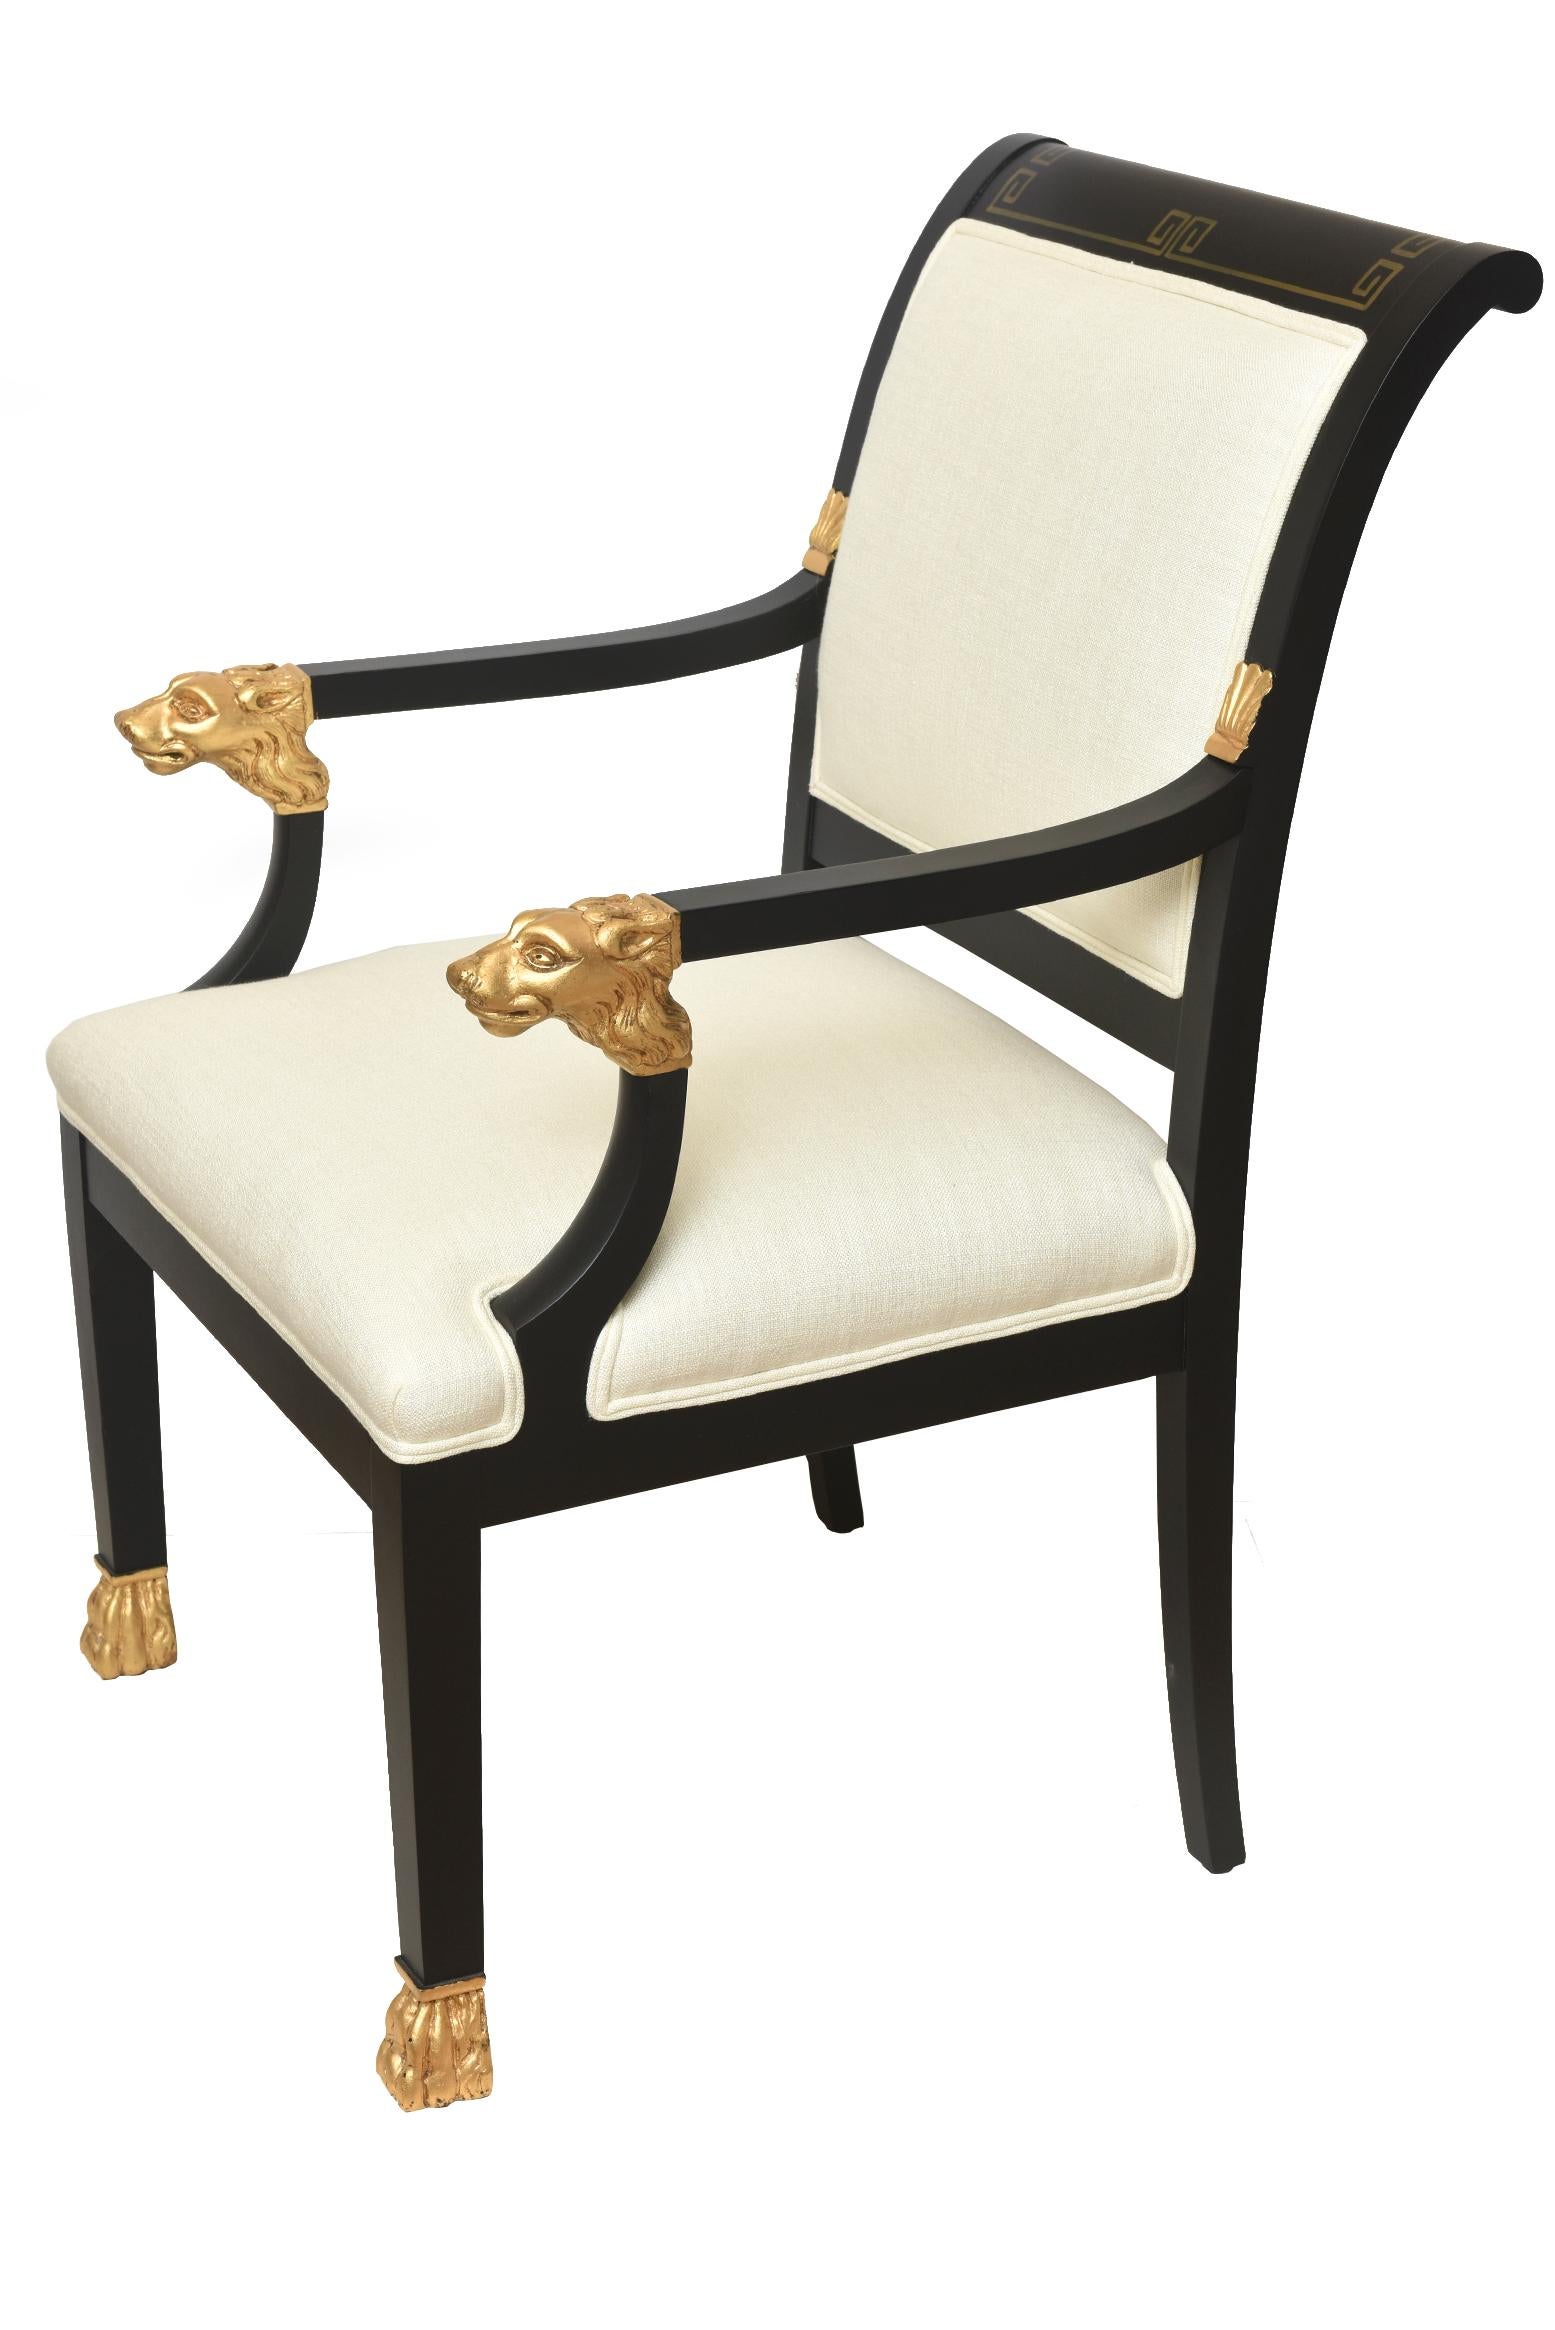 Regency Revival Greek Key and Ram's Head Regency Gold Leafed and Wood Upholstered Side Chair For Sale